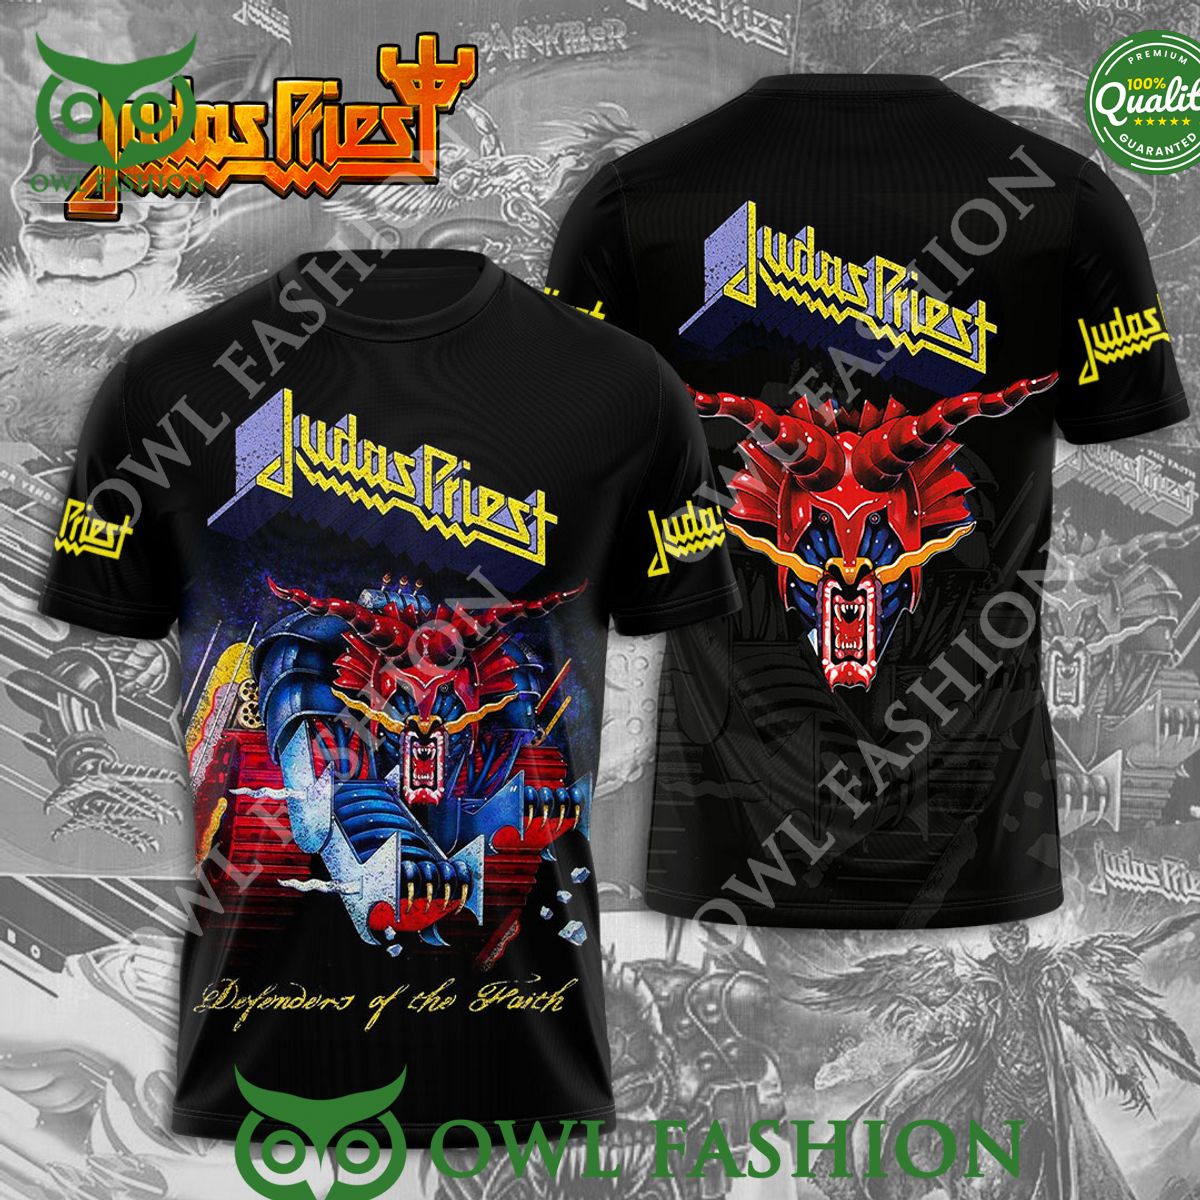 Judas Priest Rock Hard Ride Free Defenders of the Faith t shirt